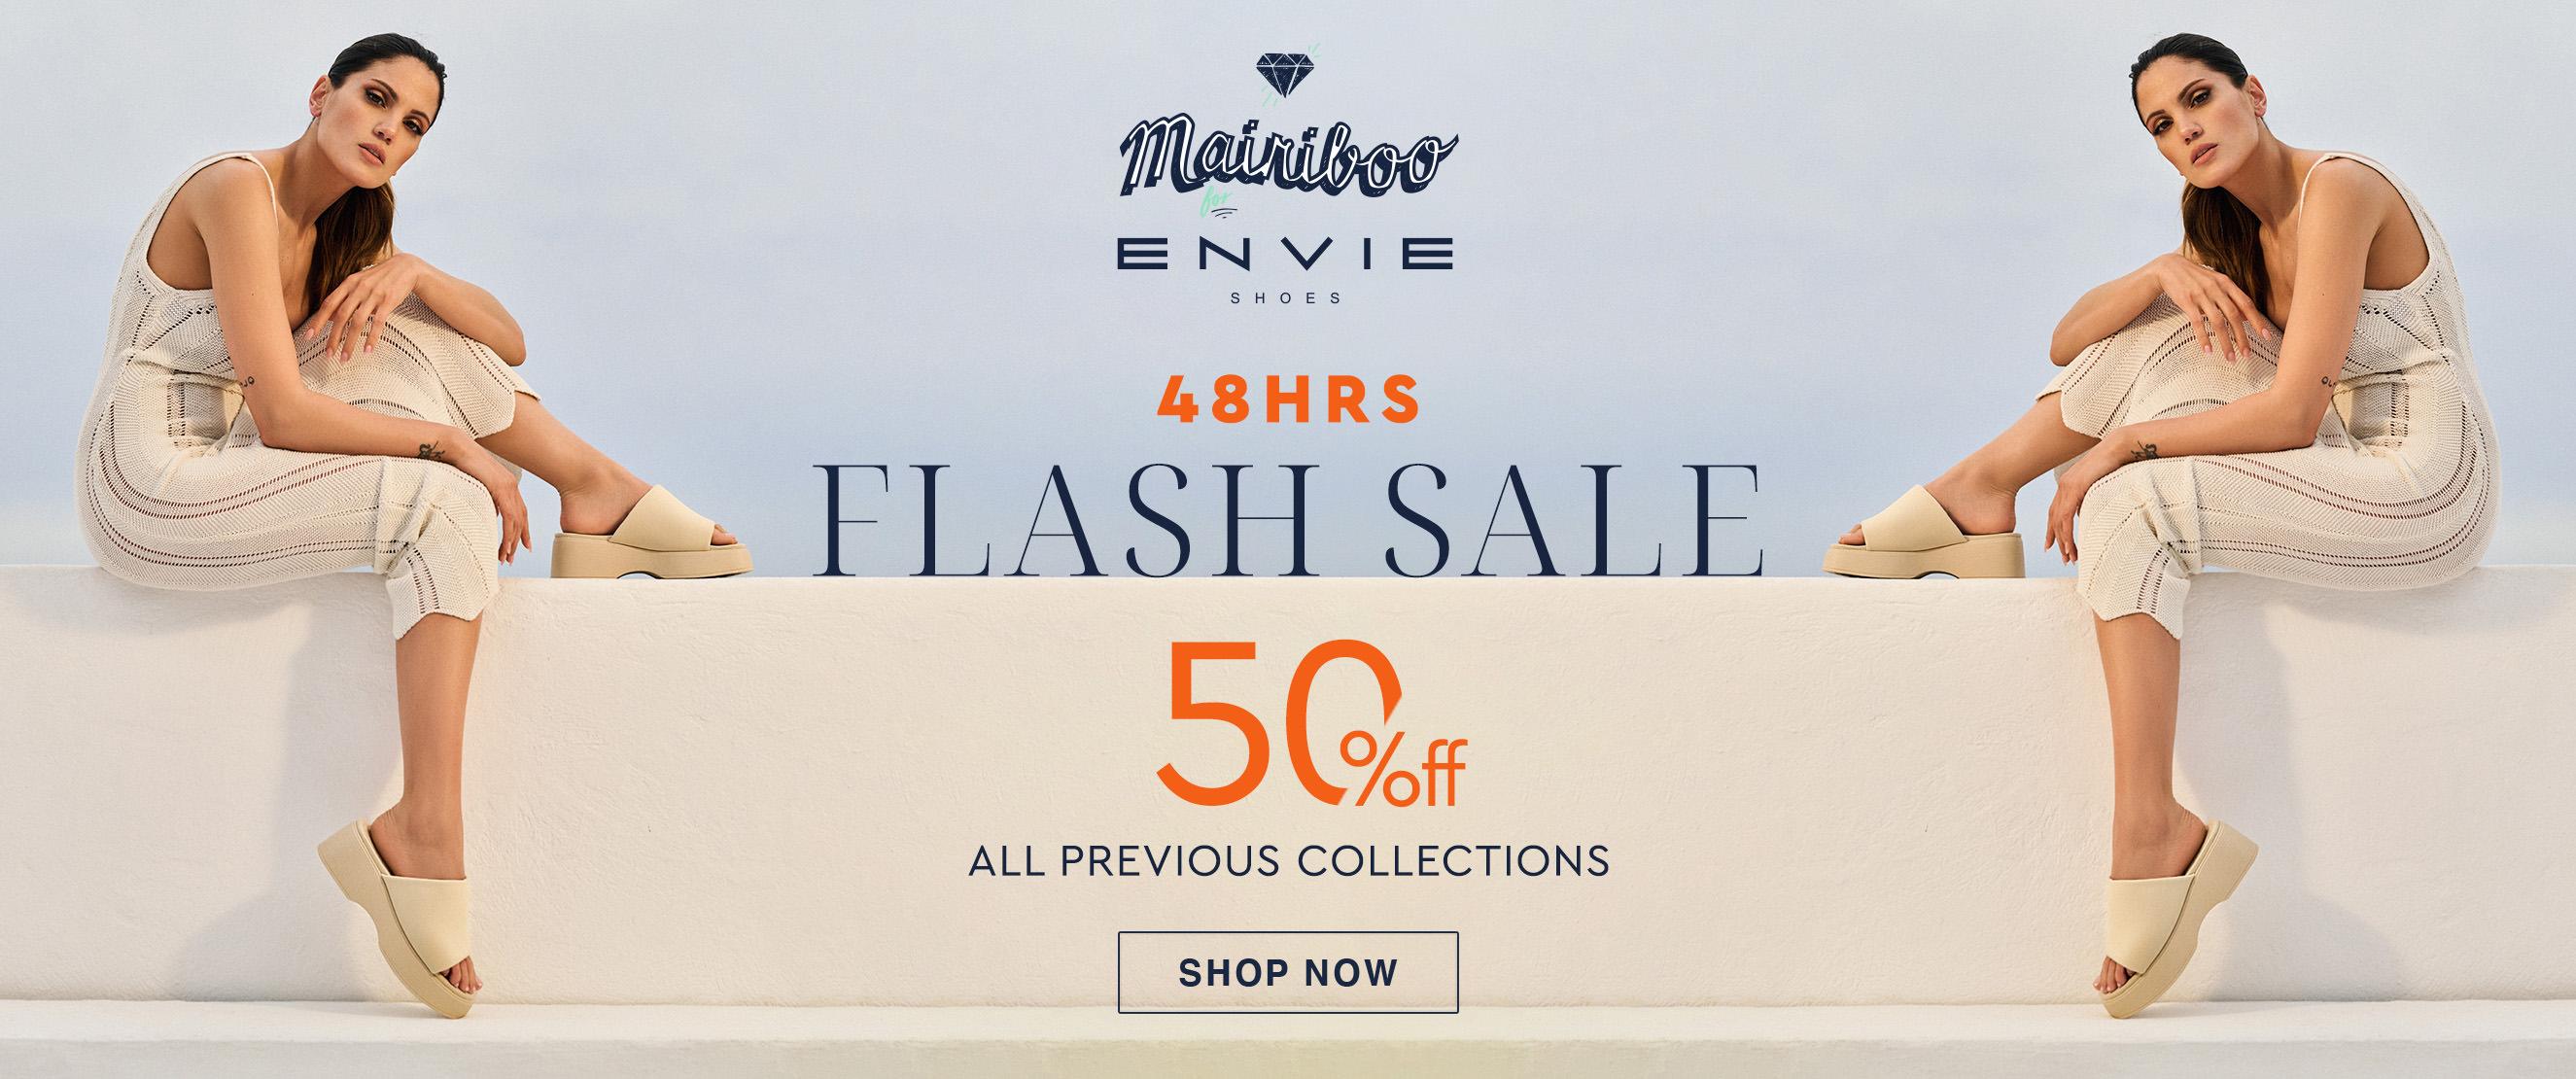 Mairiboo for Envie Flash Sale